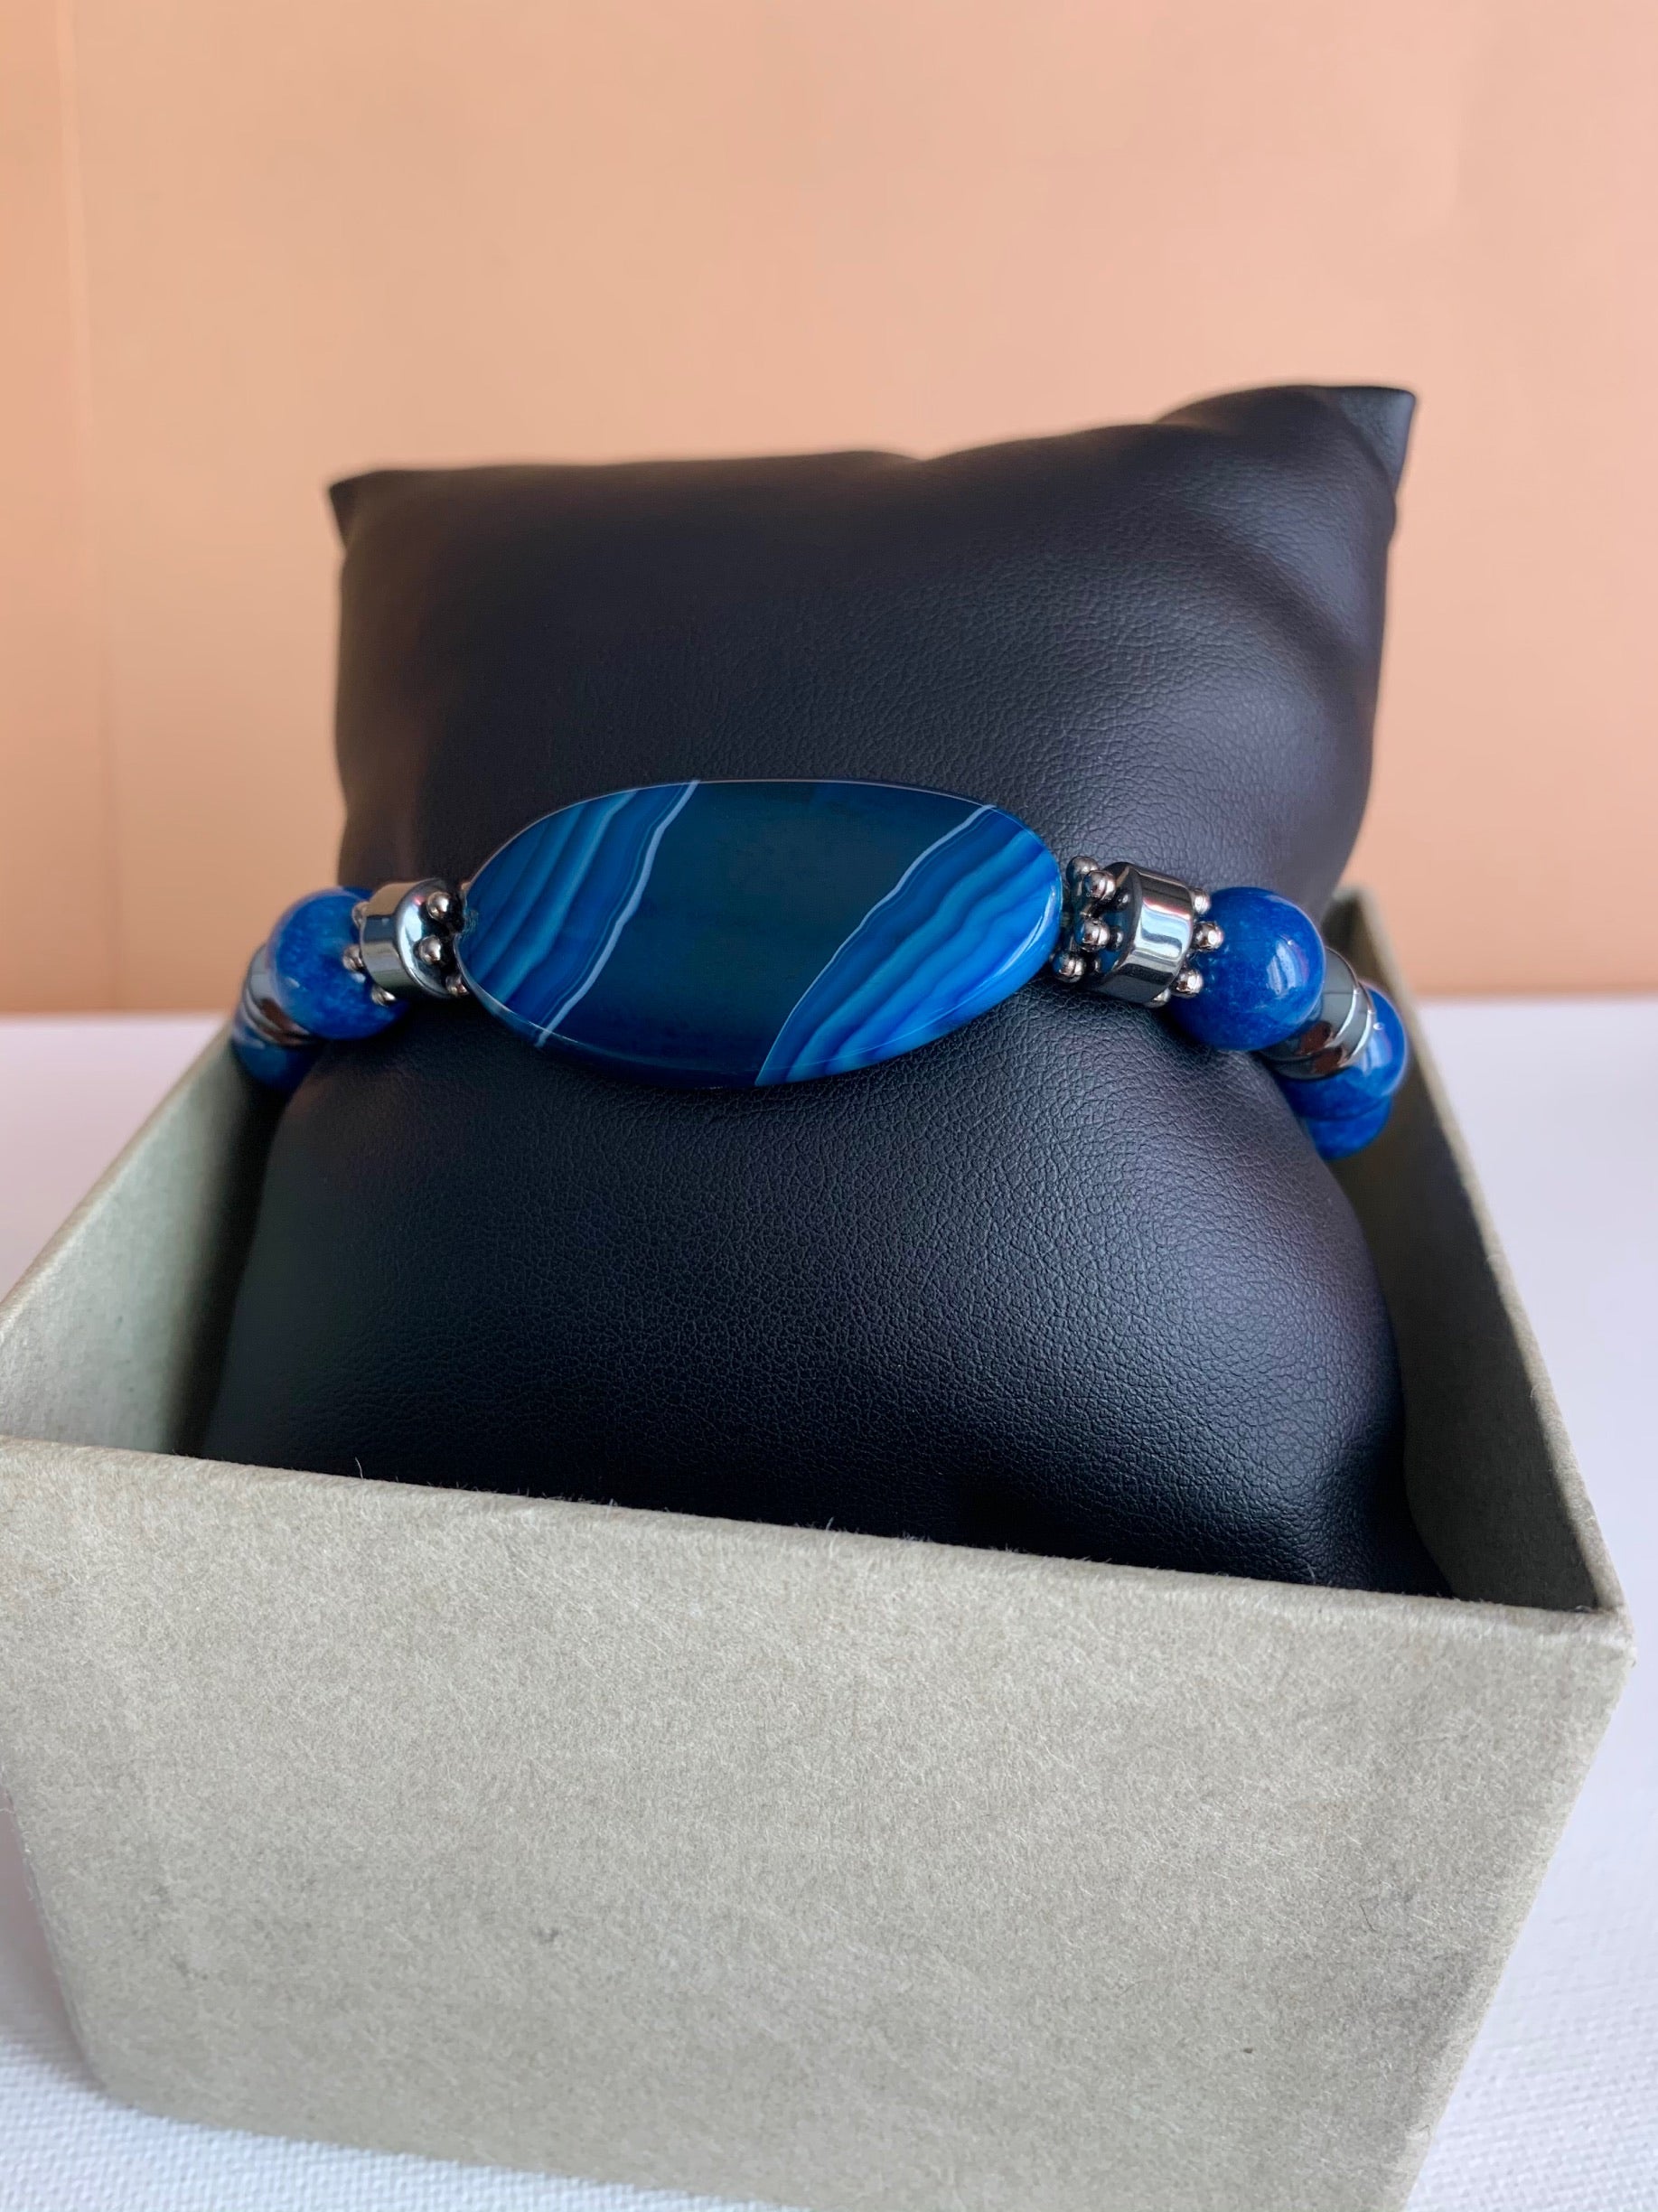 Blue Agate Stone Bracelet